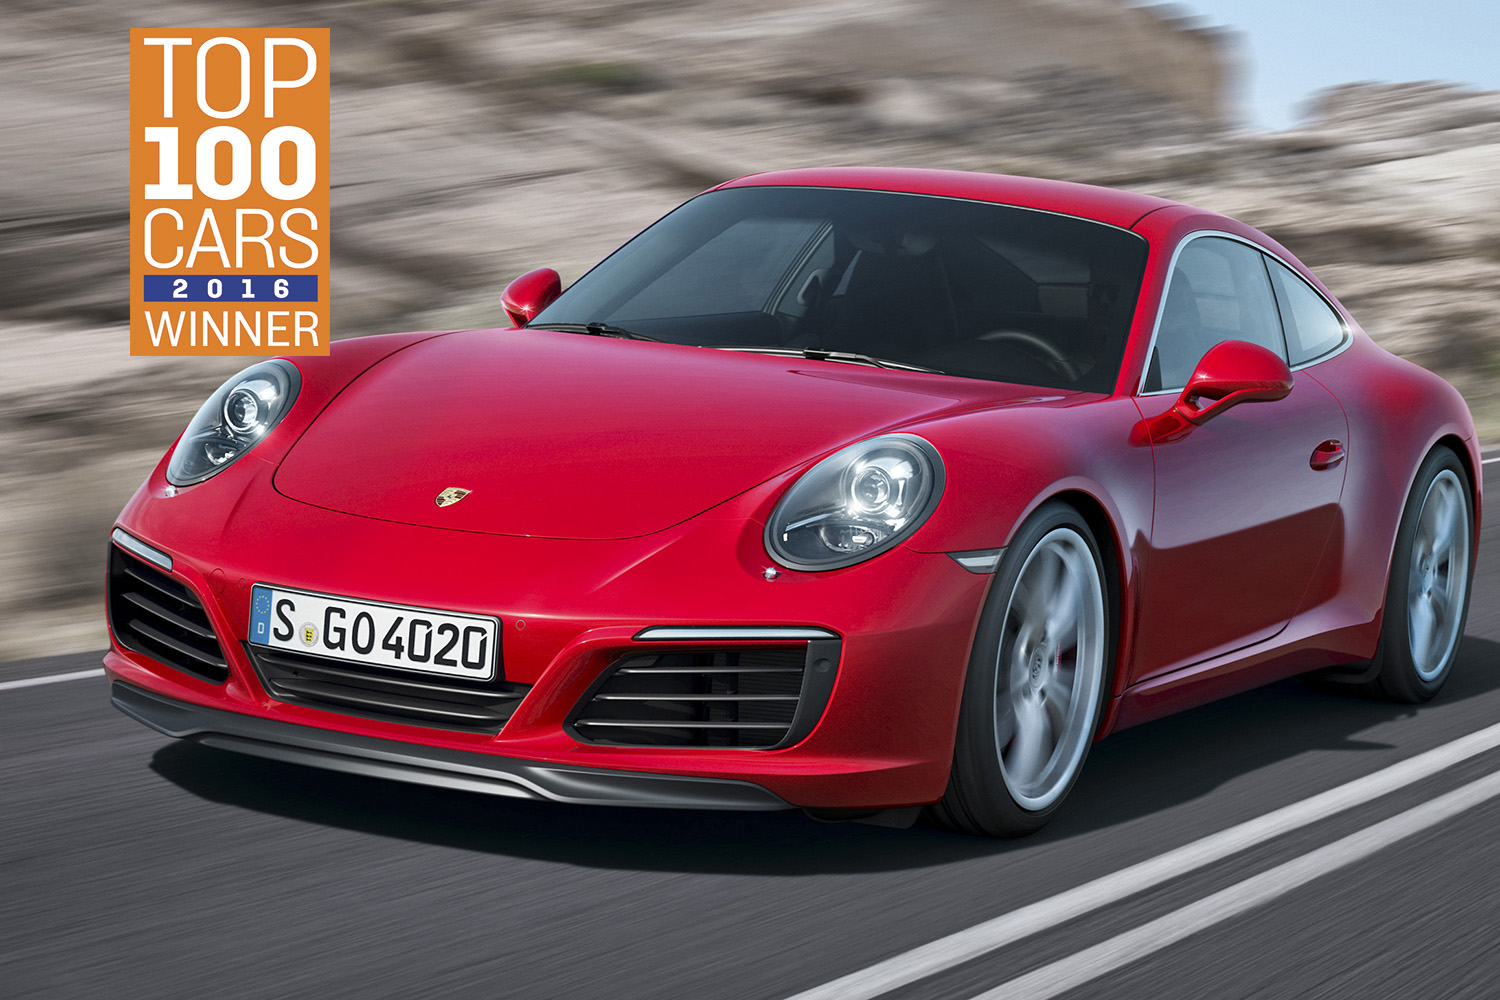 Top 100 cars 2016: Top 5 sports cars - Porsche 911